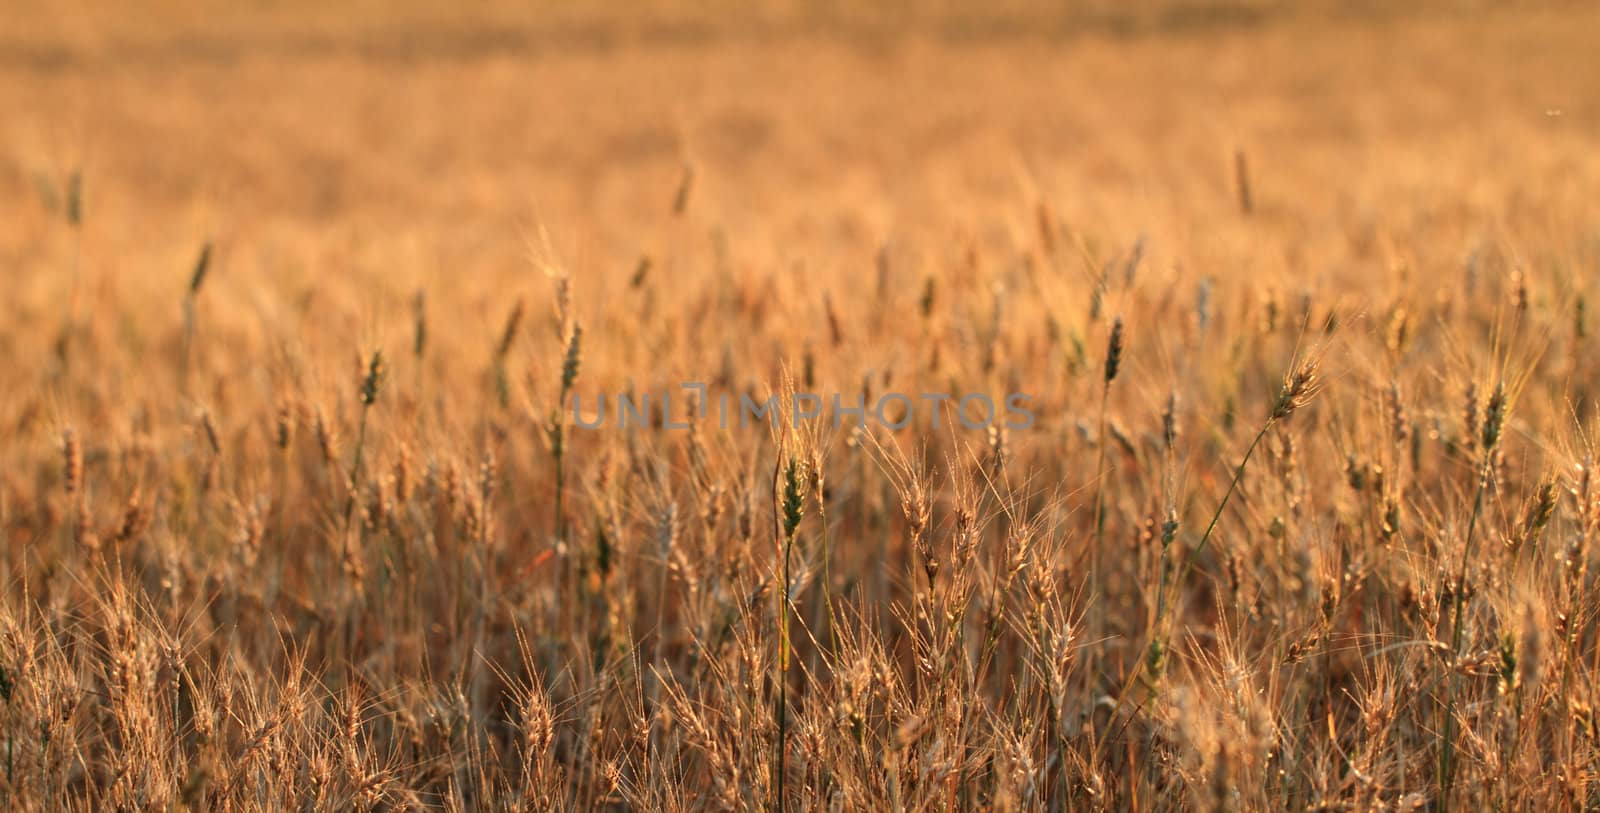 Fields of wheat by Nneirda